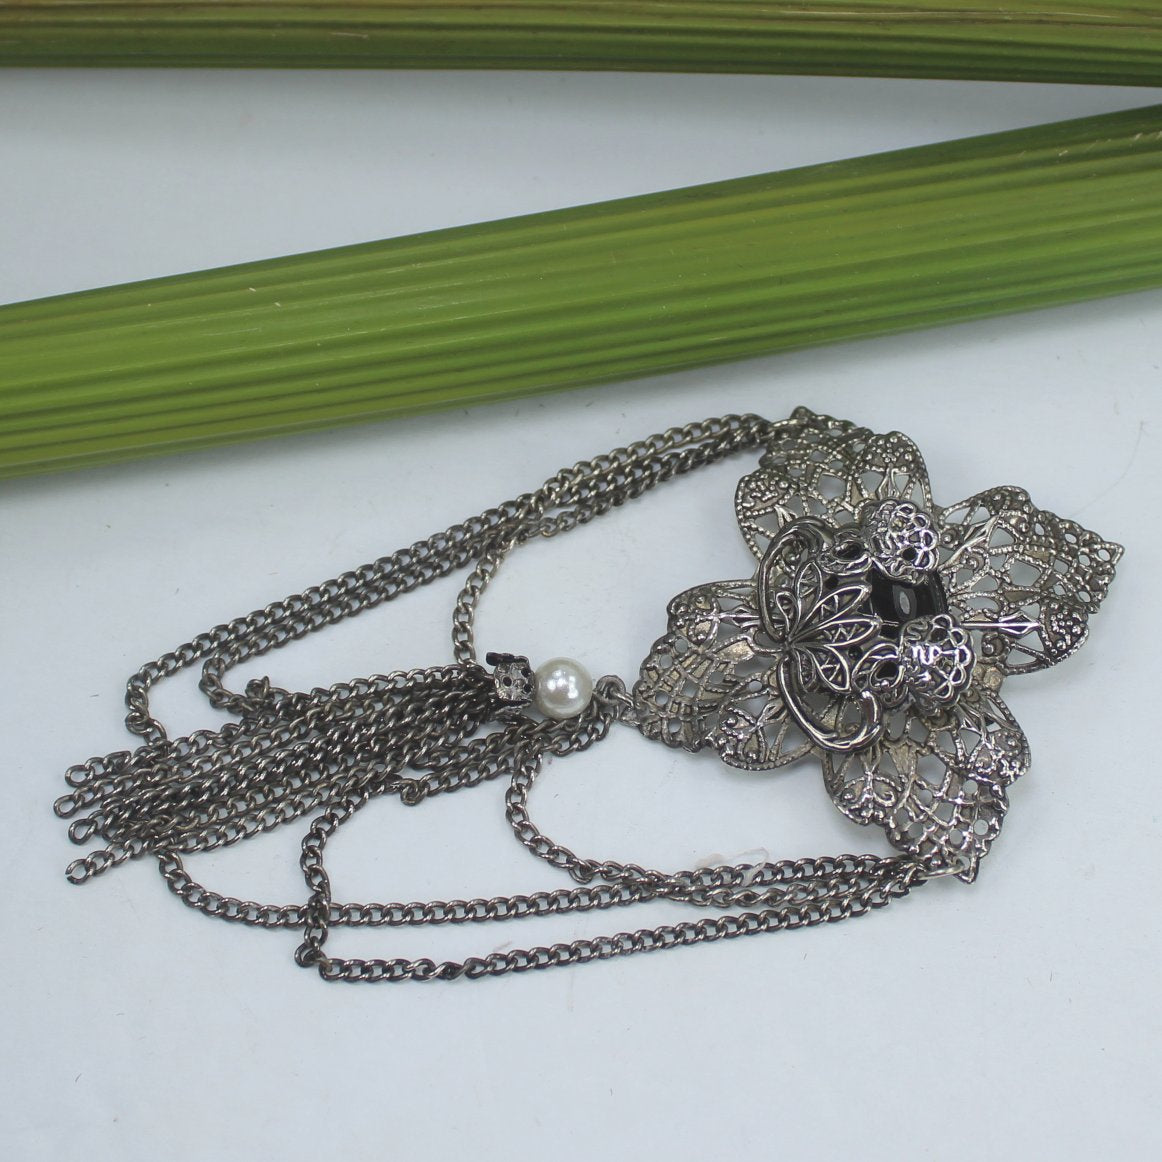 1928 Jewelry Company Filigree Pin Onyx Pearl Chains nice filigree